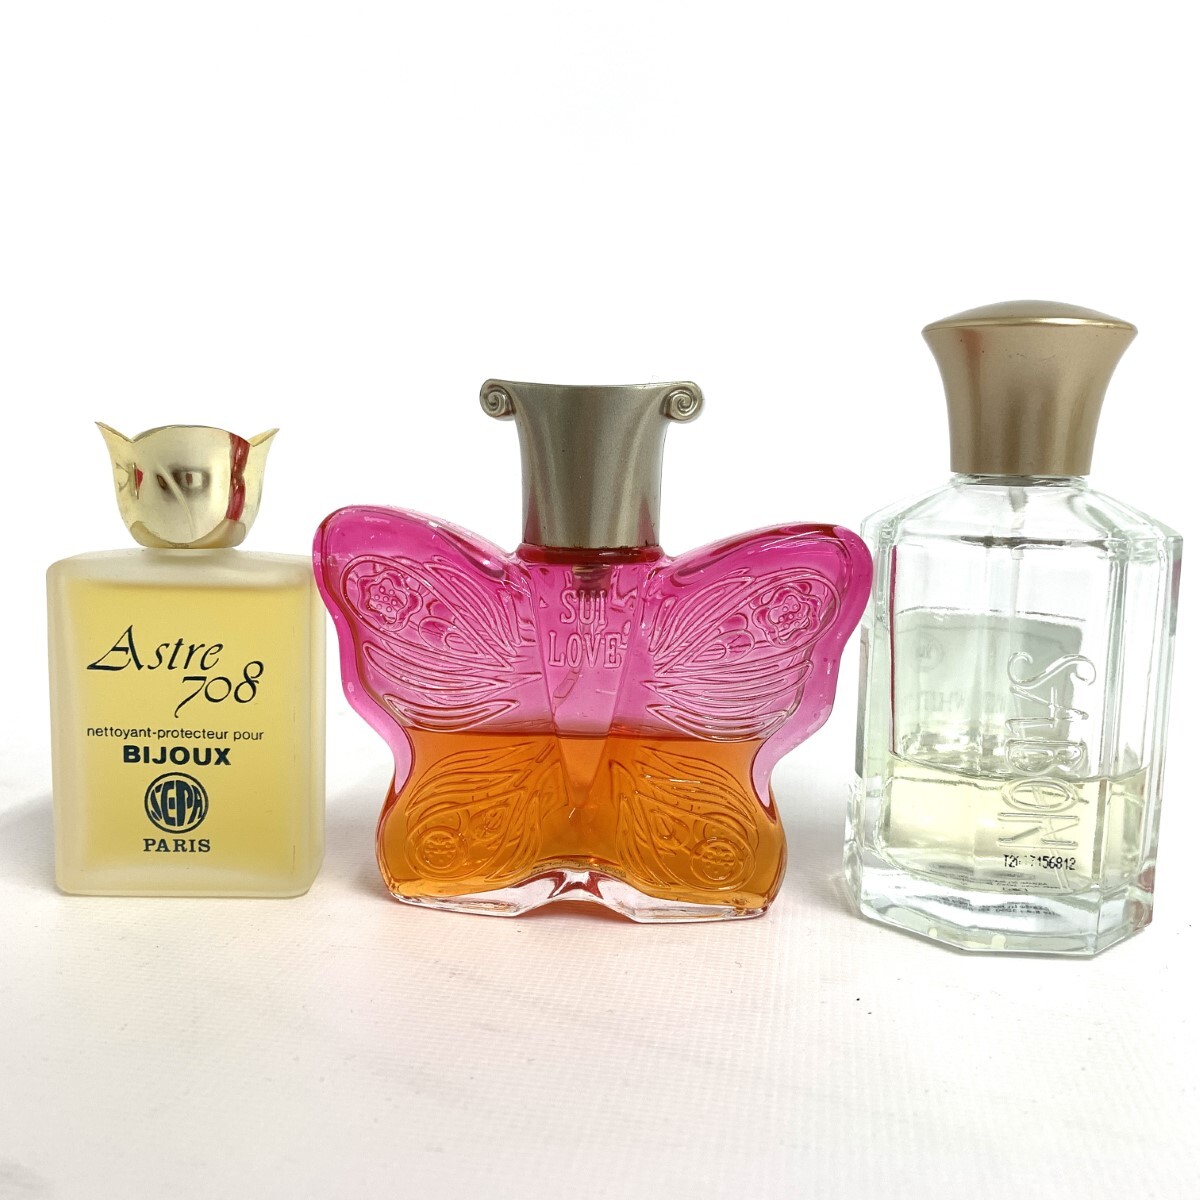  junk * BVLGARY Dior Lanvin Lancome other perfume * set sale set Pal famfragrance fragrance 